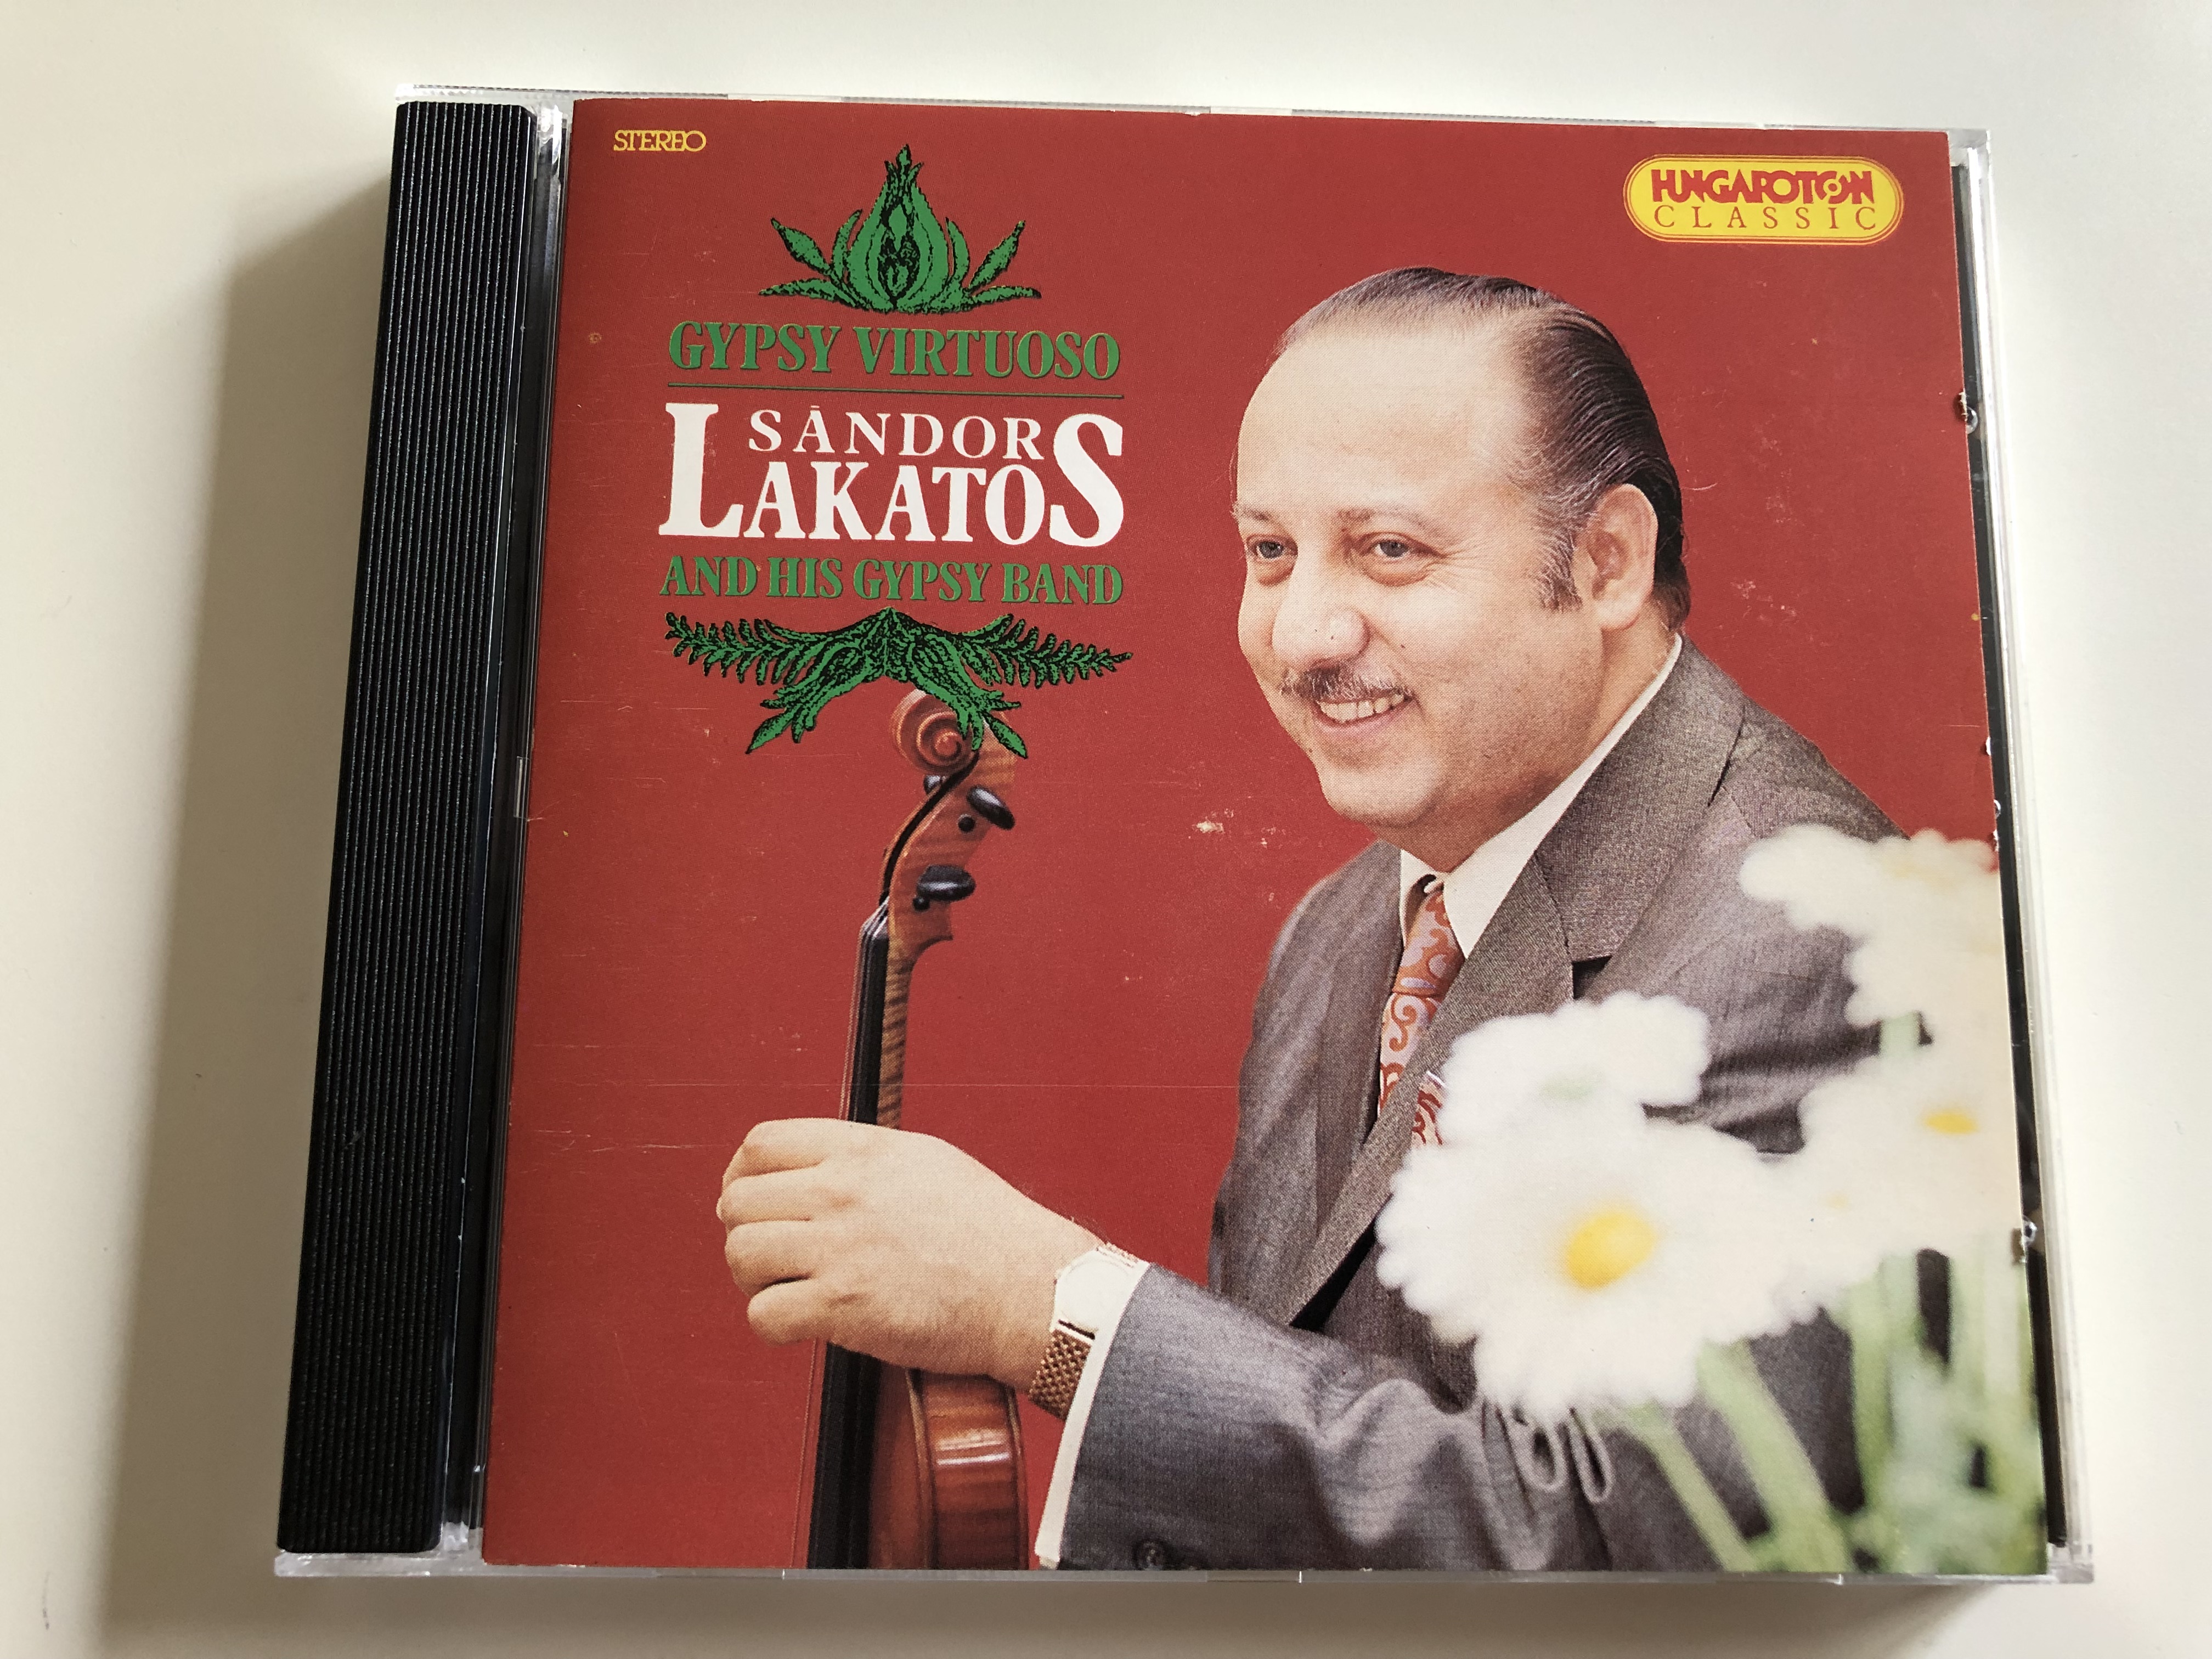 gypsy-virtuoso-s-ndor-lakatos-and-his-gypsy-band-a-cig-nyvirtu-z-hungaroton-classic-audio-cd-1994-1-.jpg